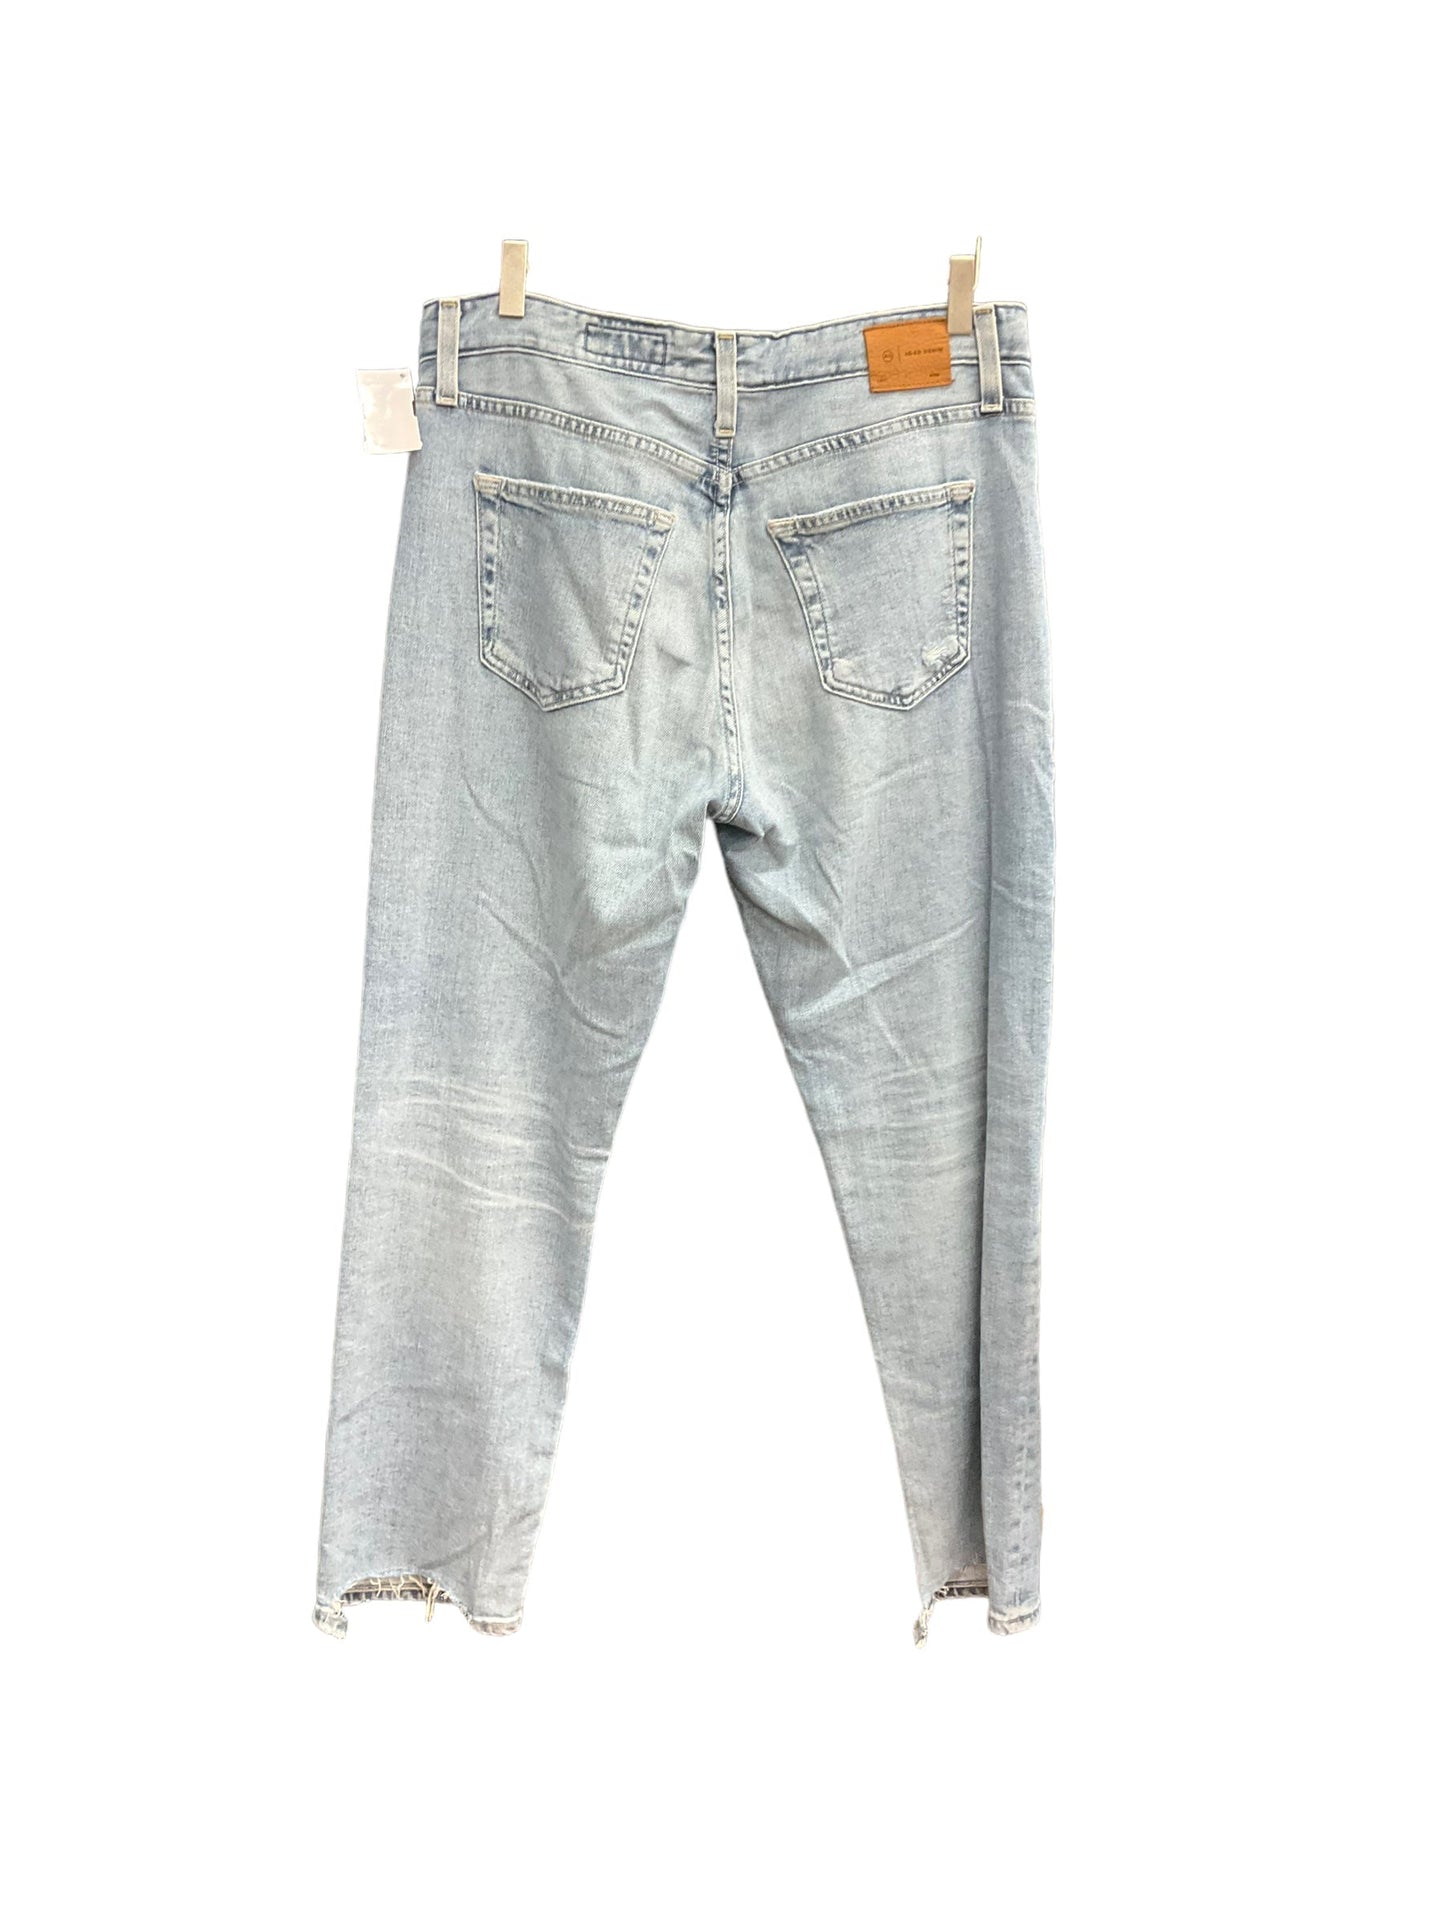 Jeans Boyfriend By Adriano Goldschmied  Size: 10